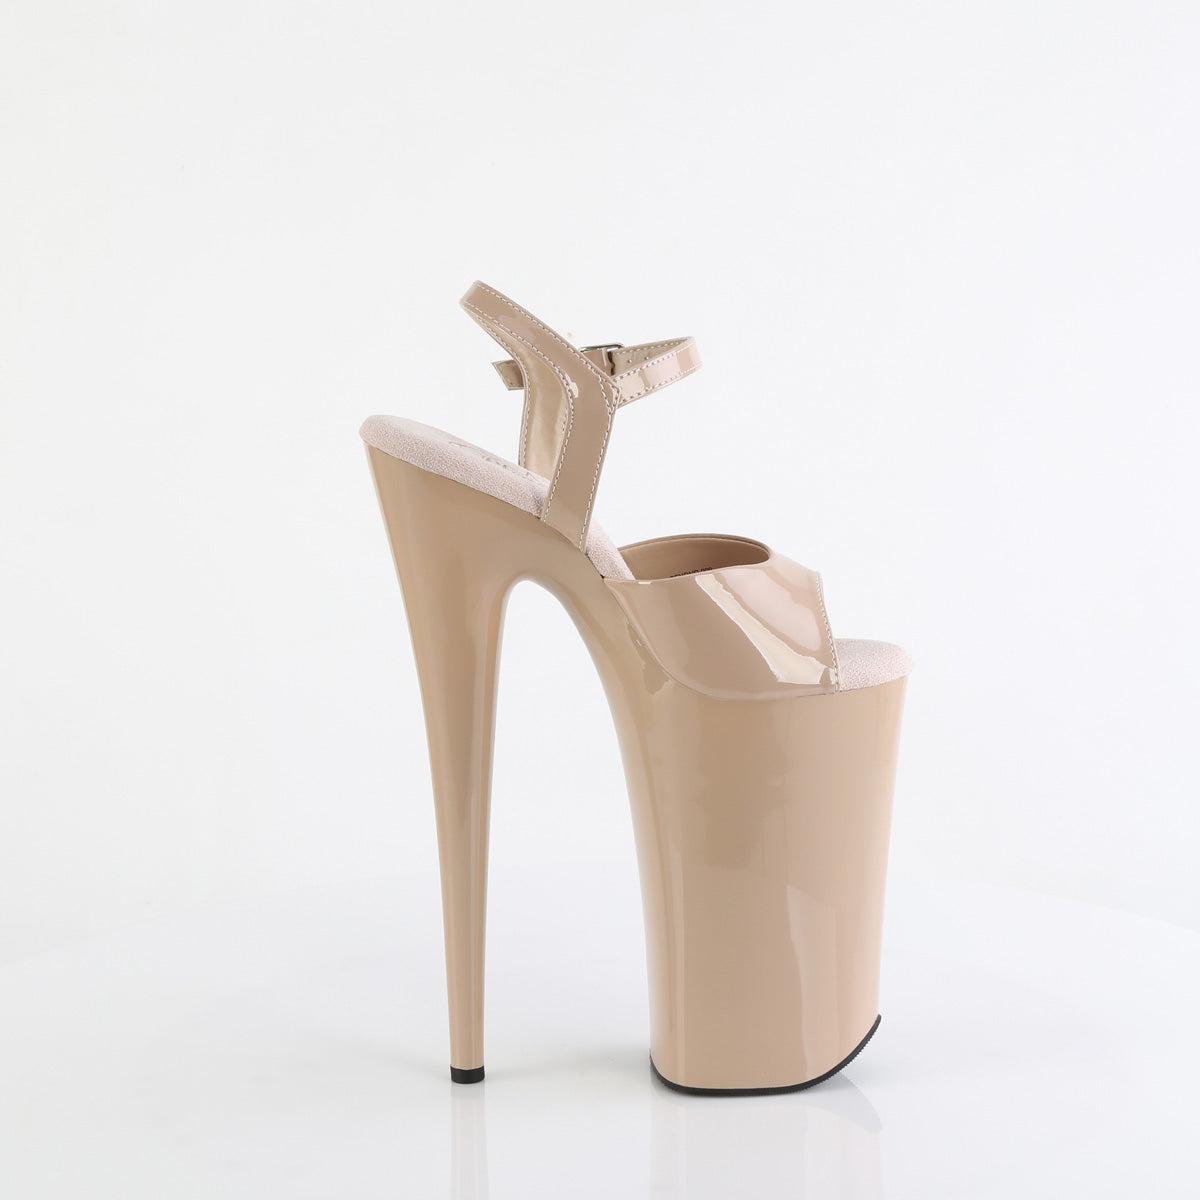 10 Inch Heel BEYOND-009 Nude Patent